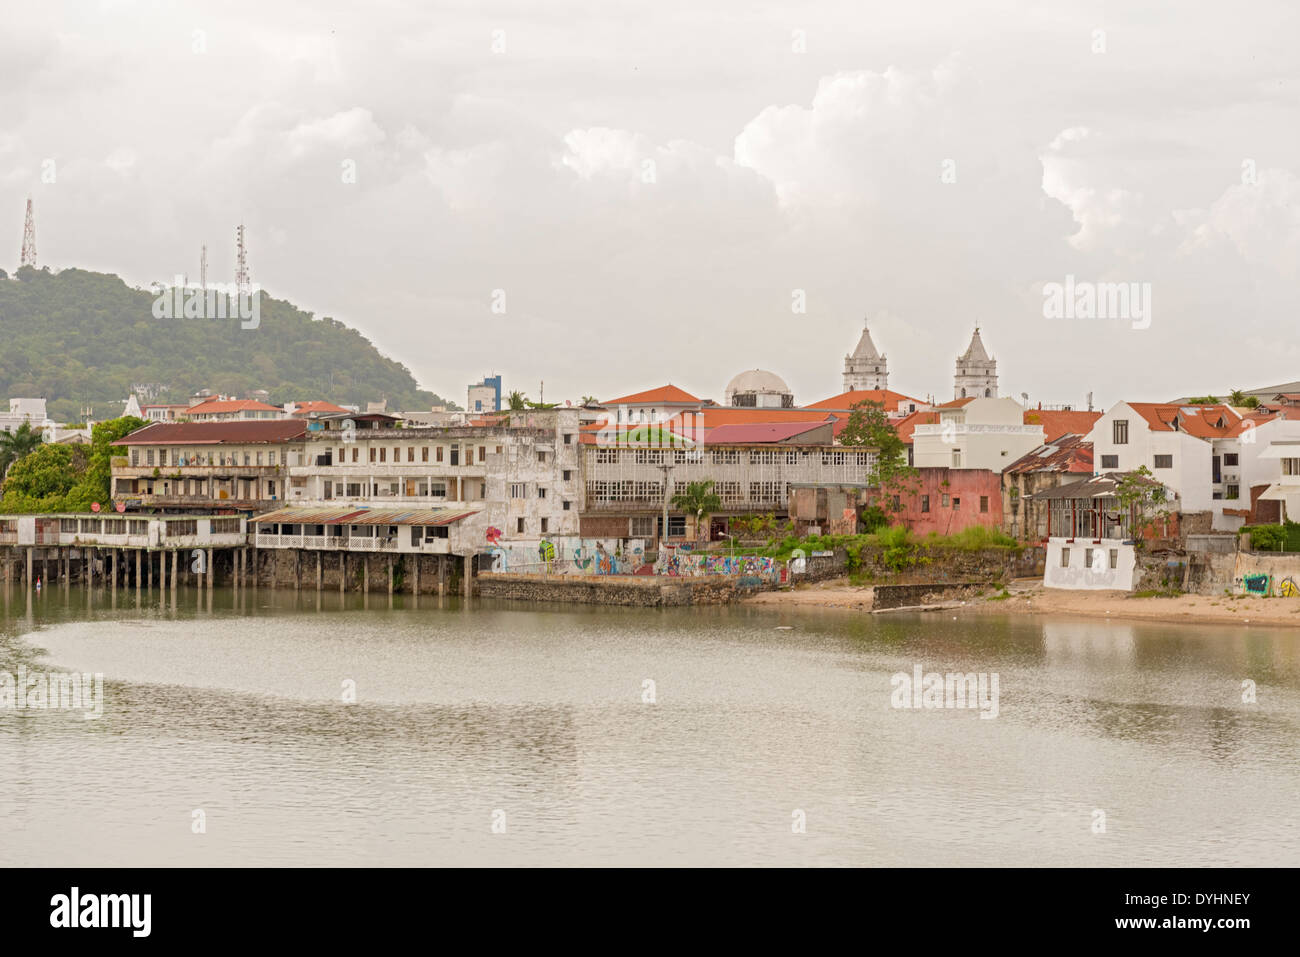 skyline of Old part of Panama city Casco Viejo Stock Photo